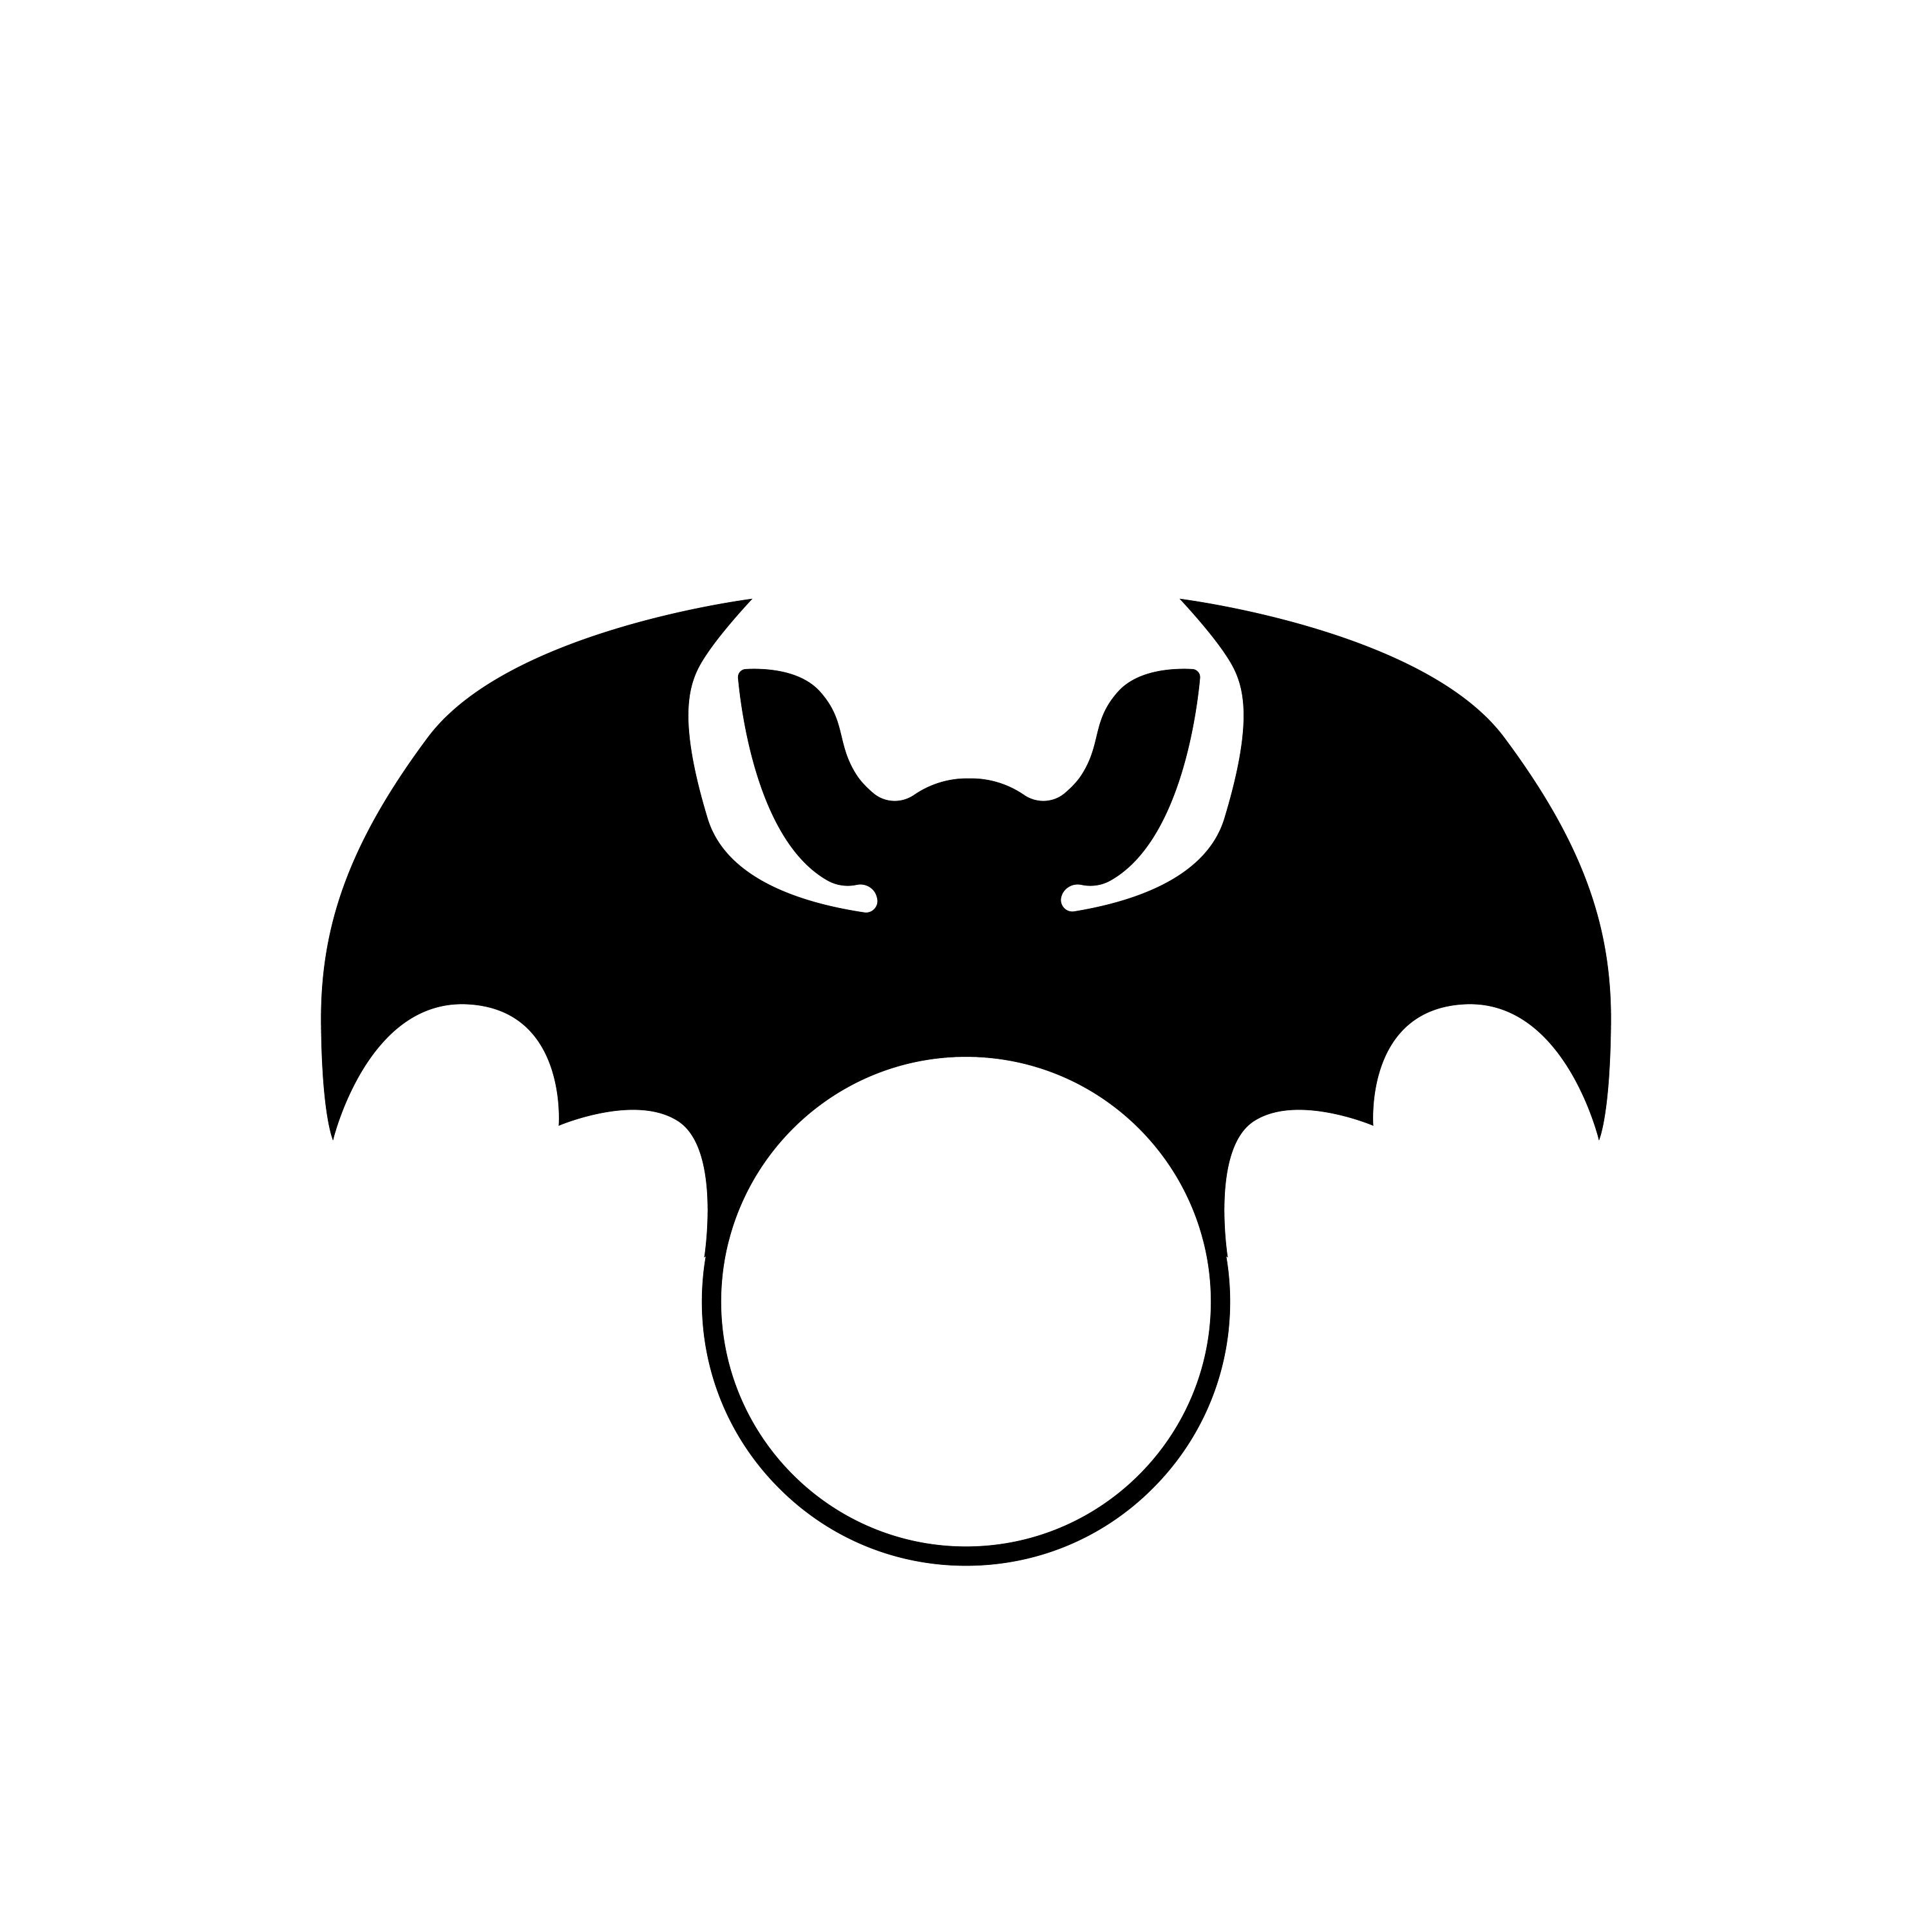 BATS Multiple bat SVG Halloween Bat SVG Bat Vector Spooky | Etsy